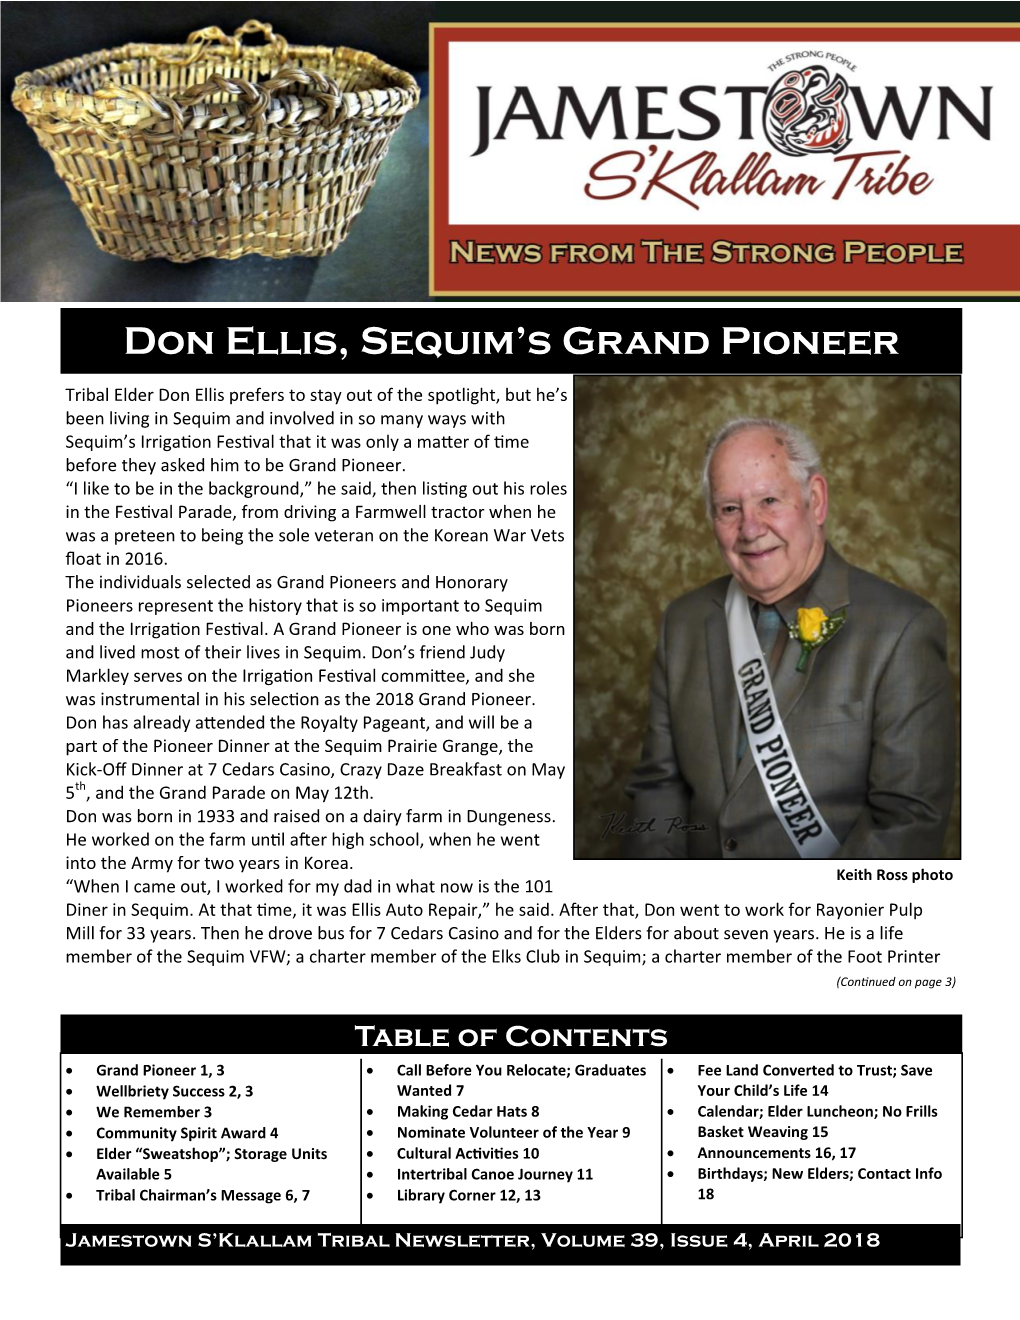 Don Ellis, Sequim's Grand Pioneer